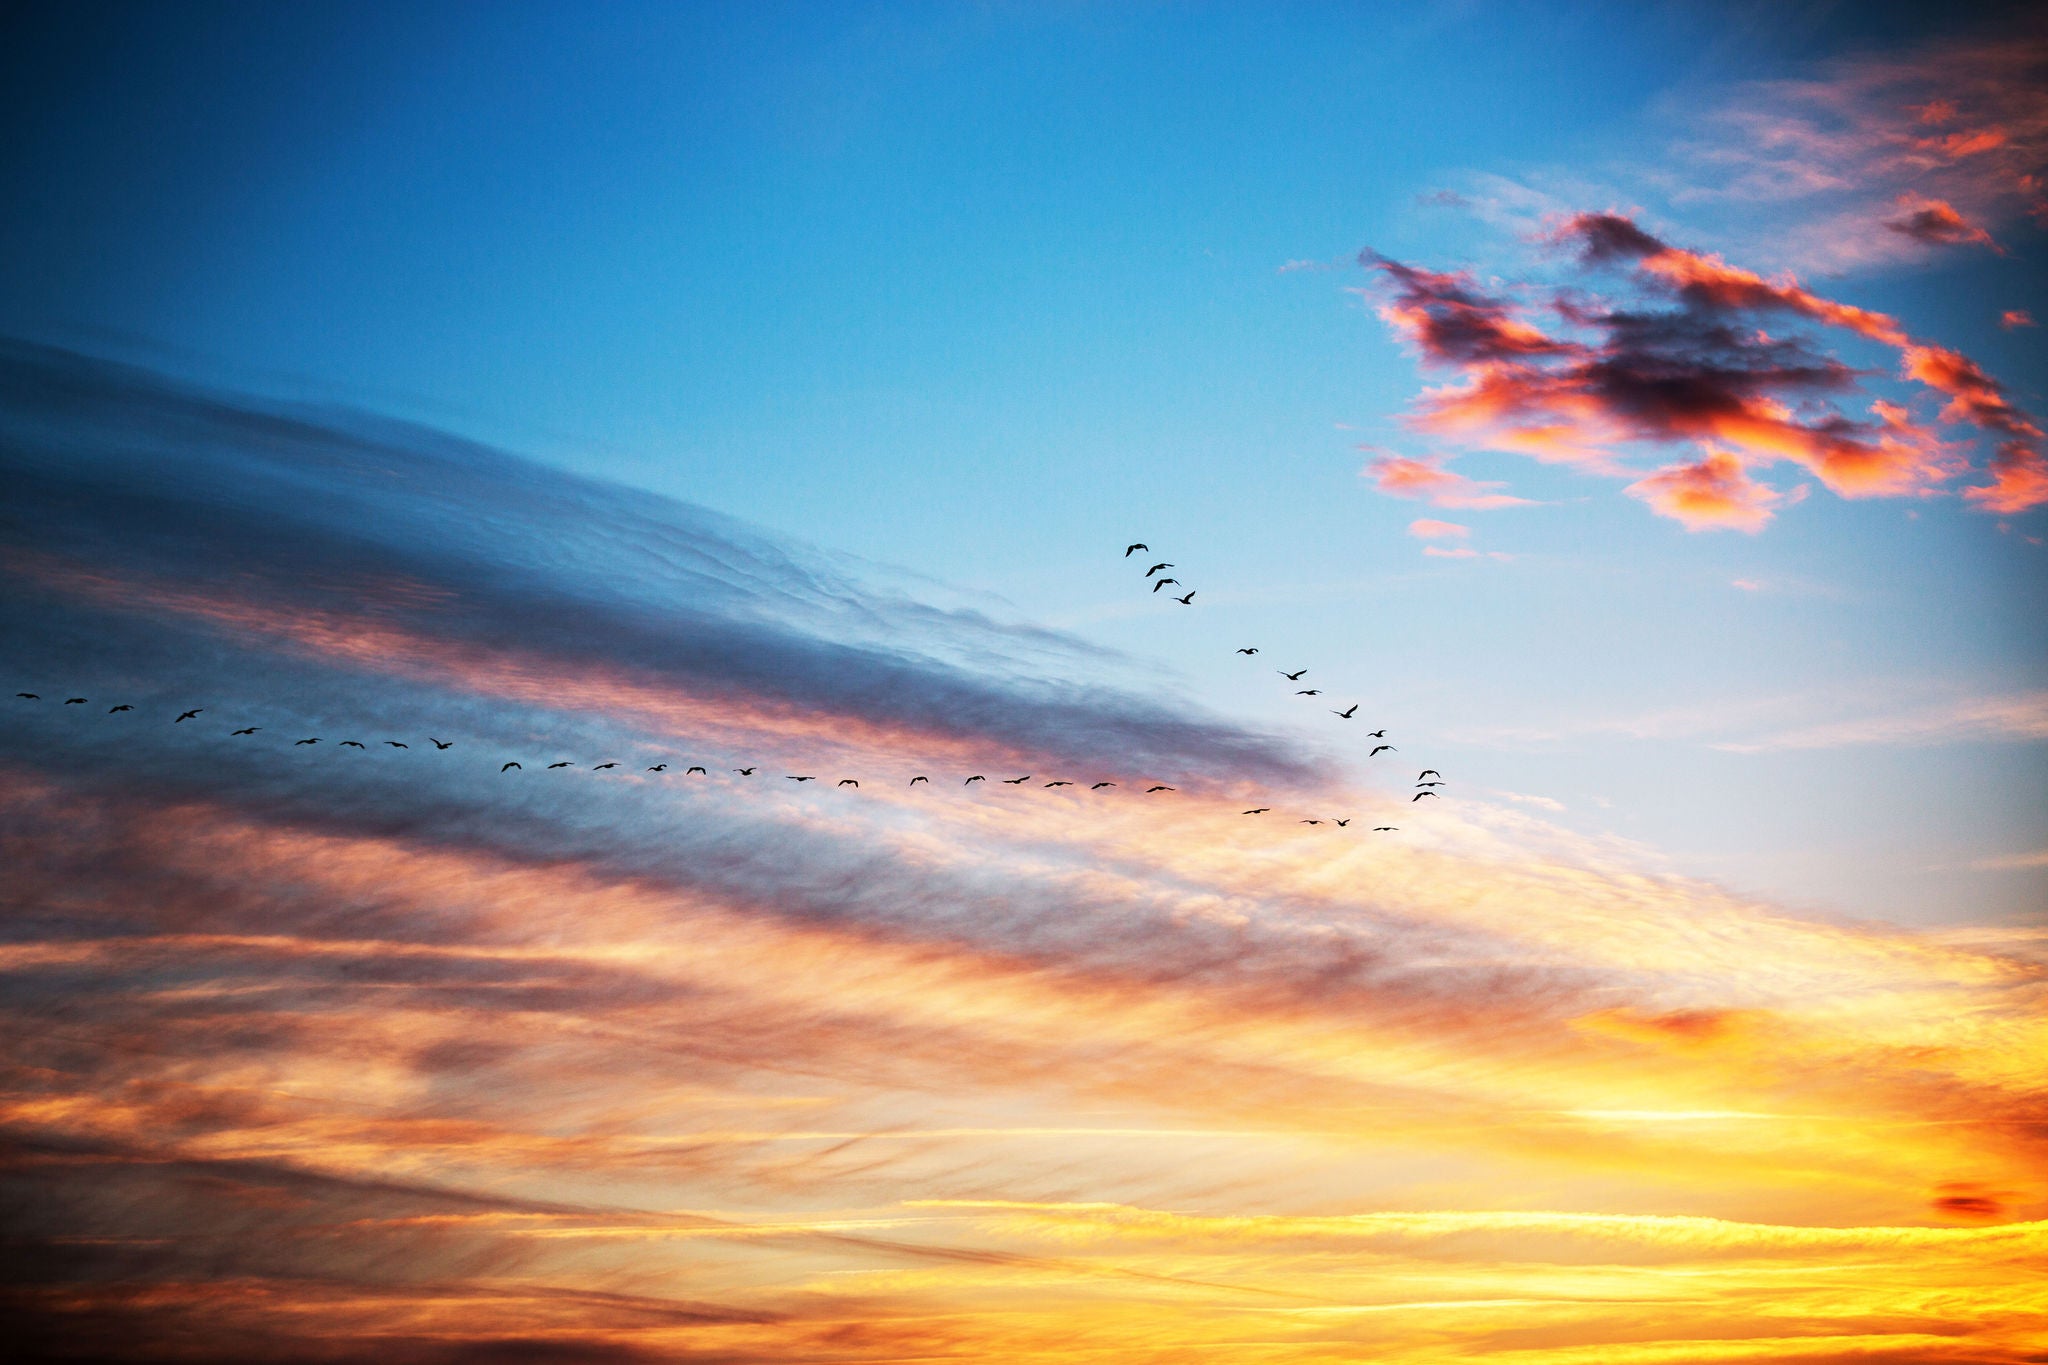 Flock of birds flying in the sky